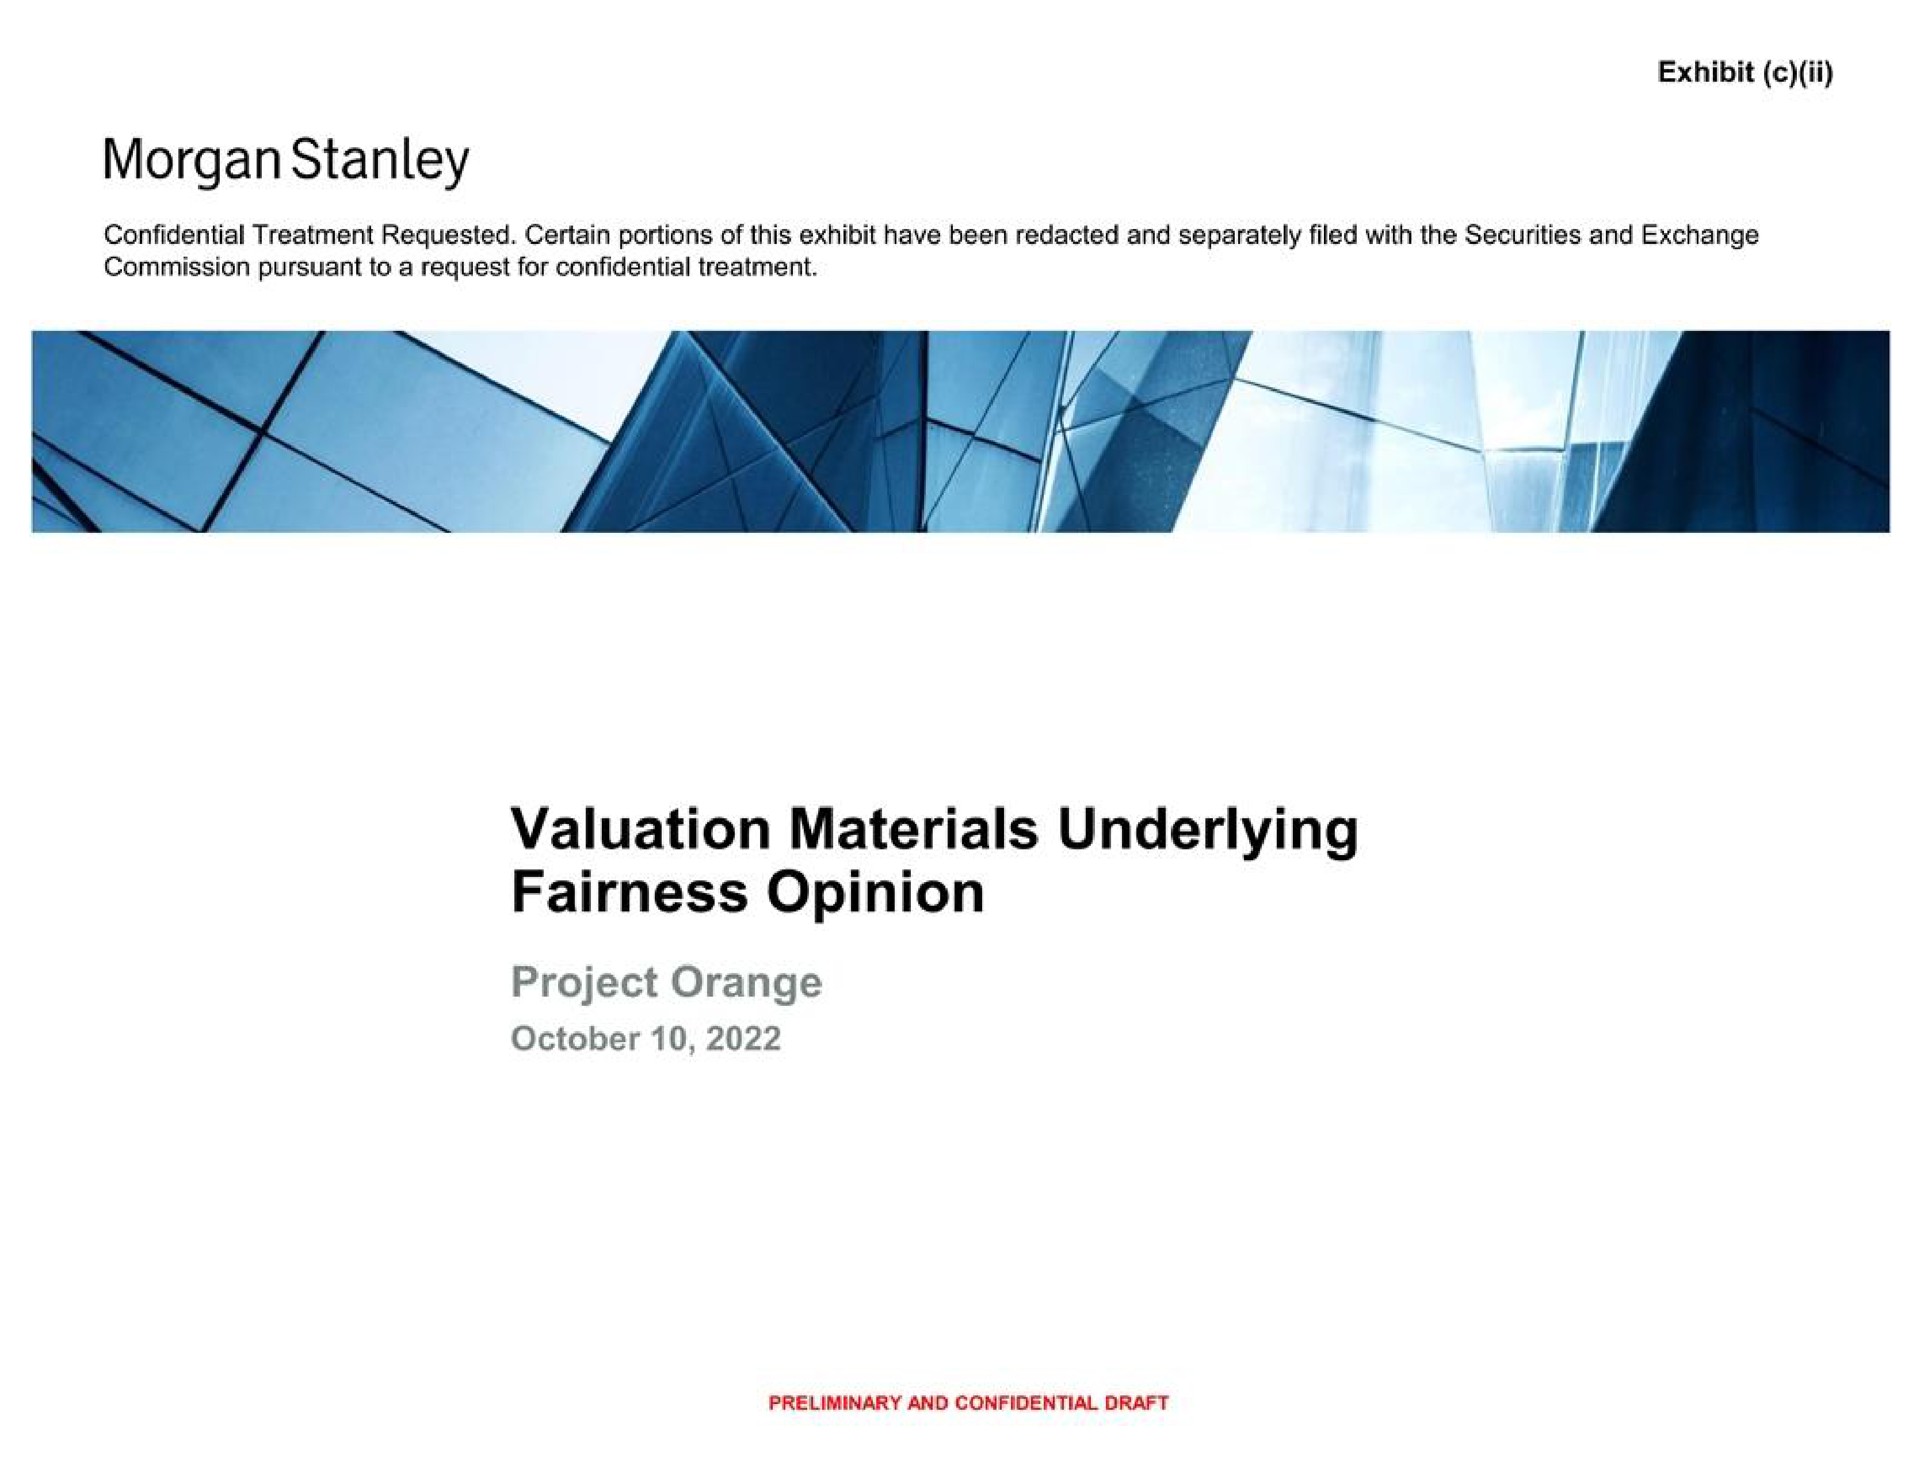 morgan exhibit valuation materials underlying fairness opinion project orange | Morgan Stanley